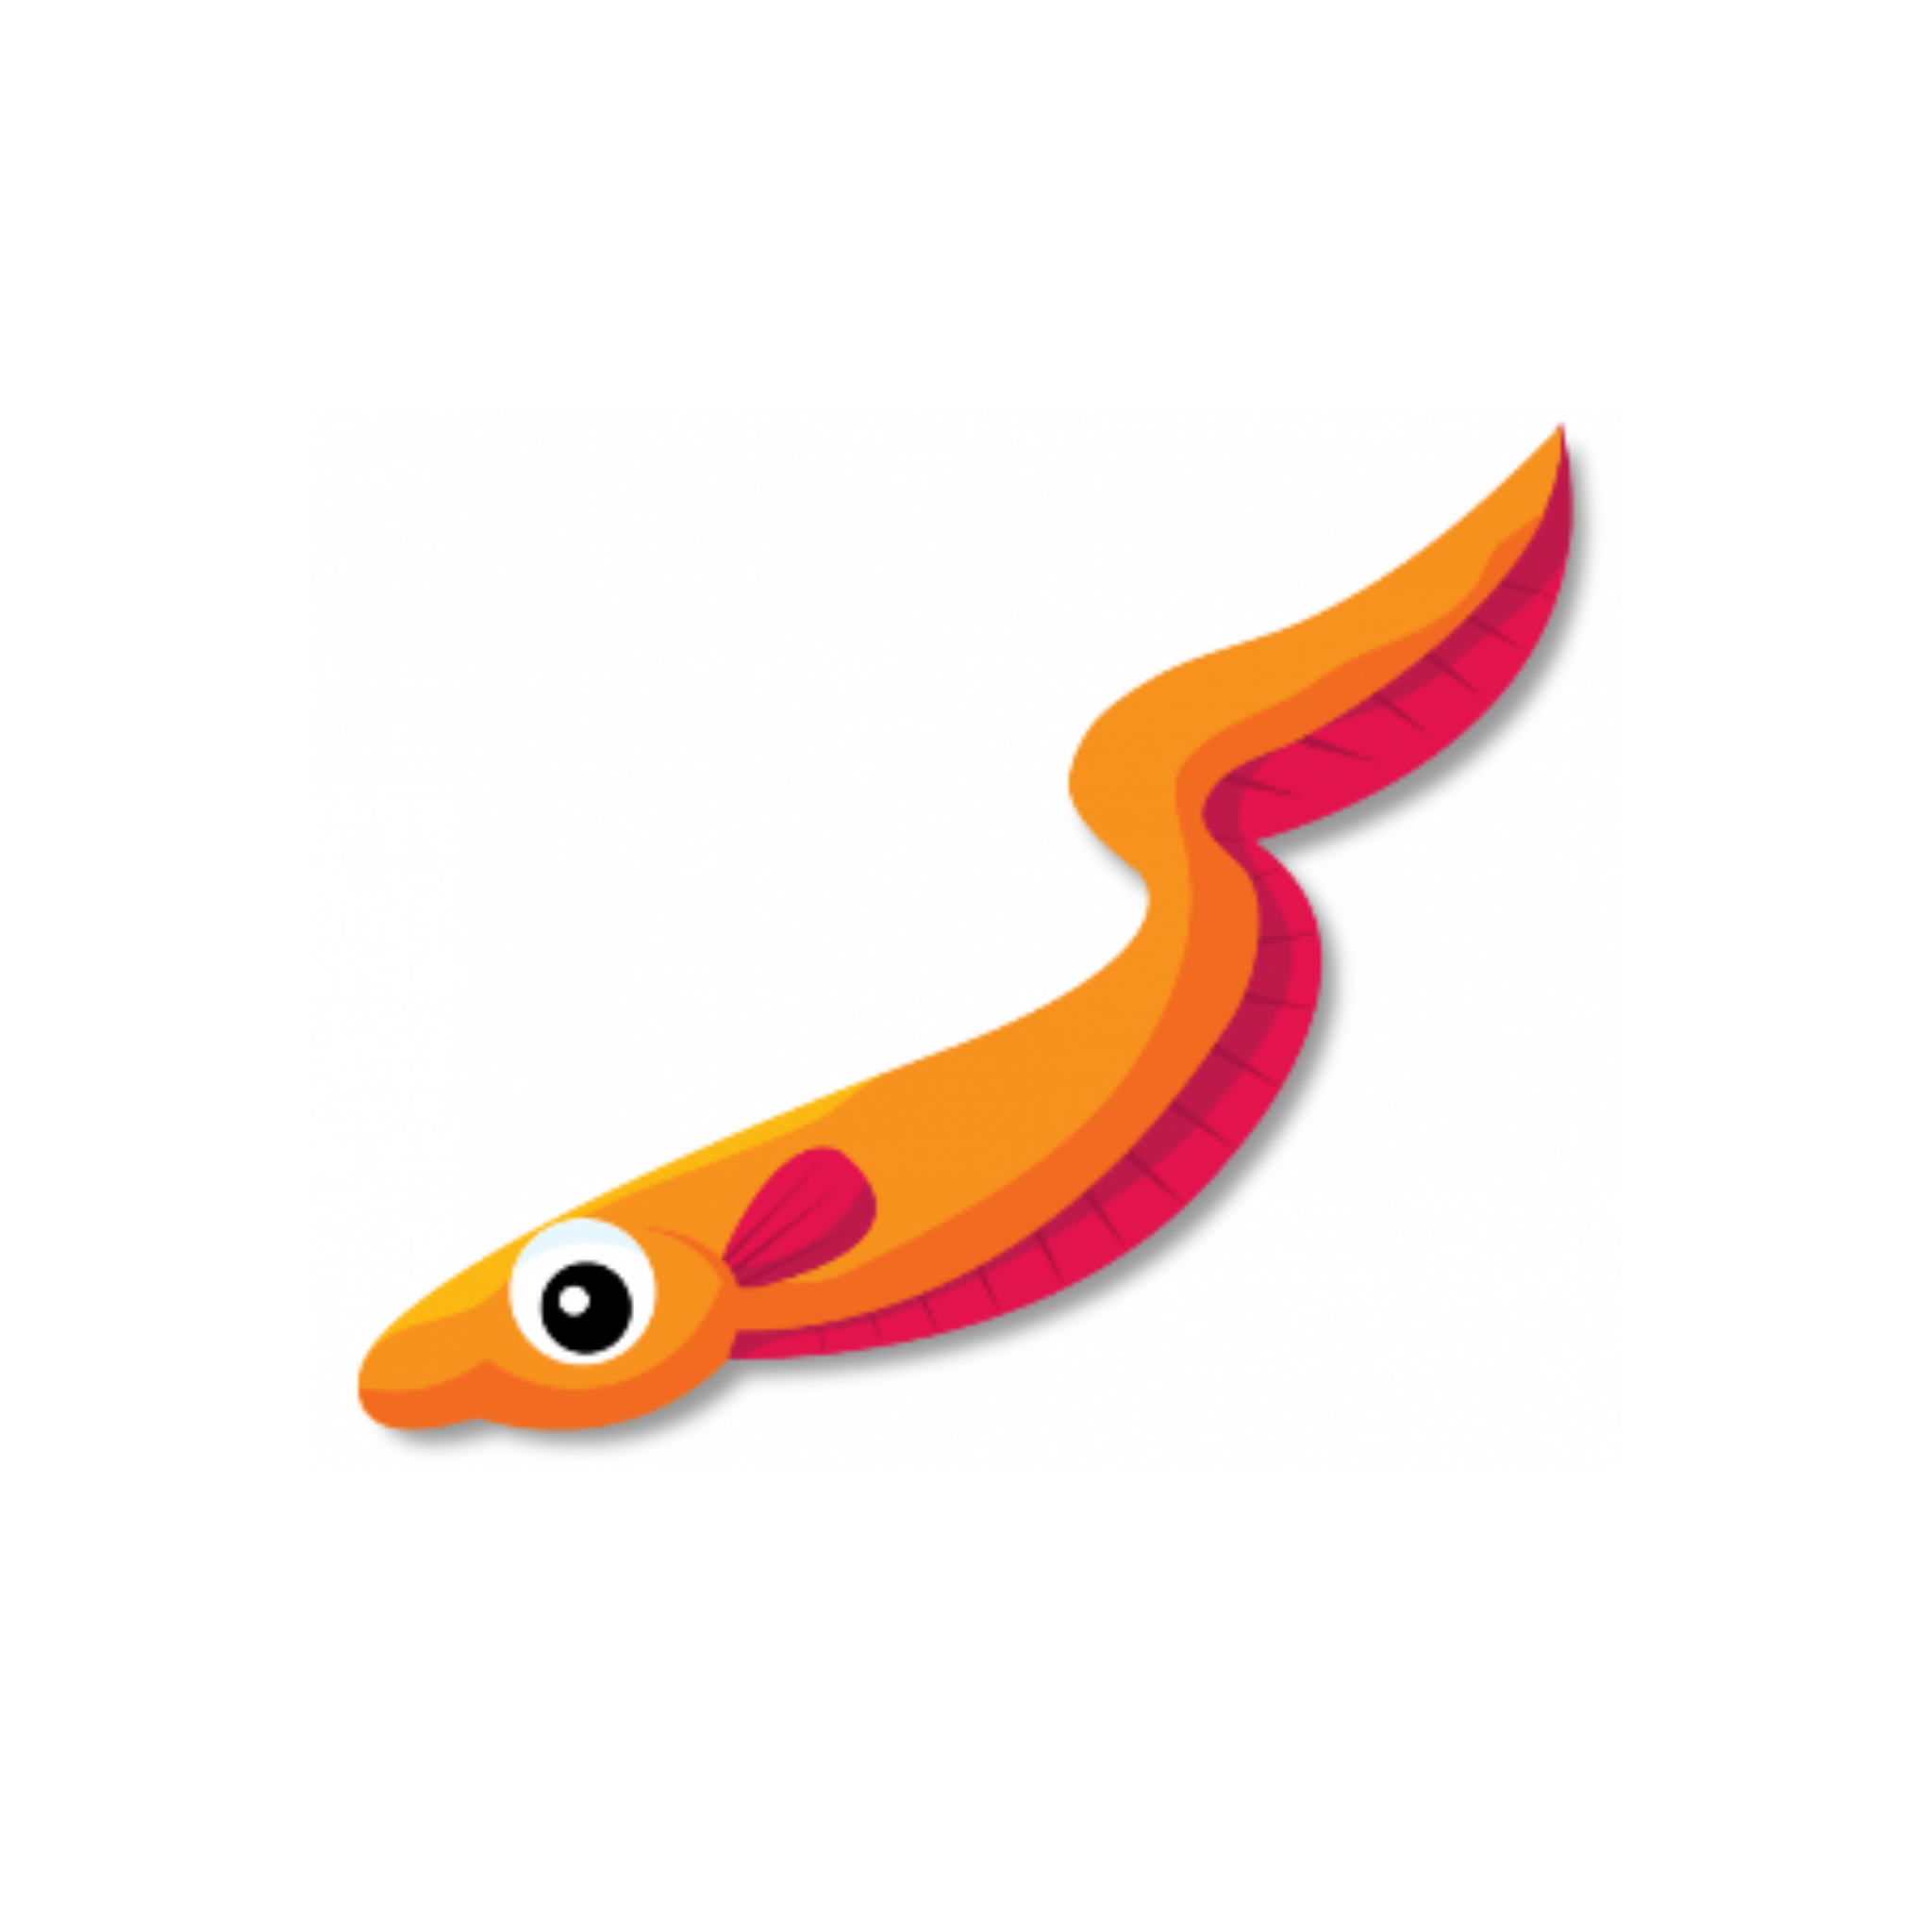 Cartoon image of eel